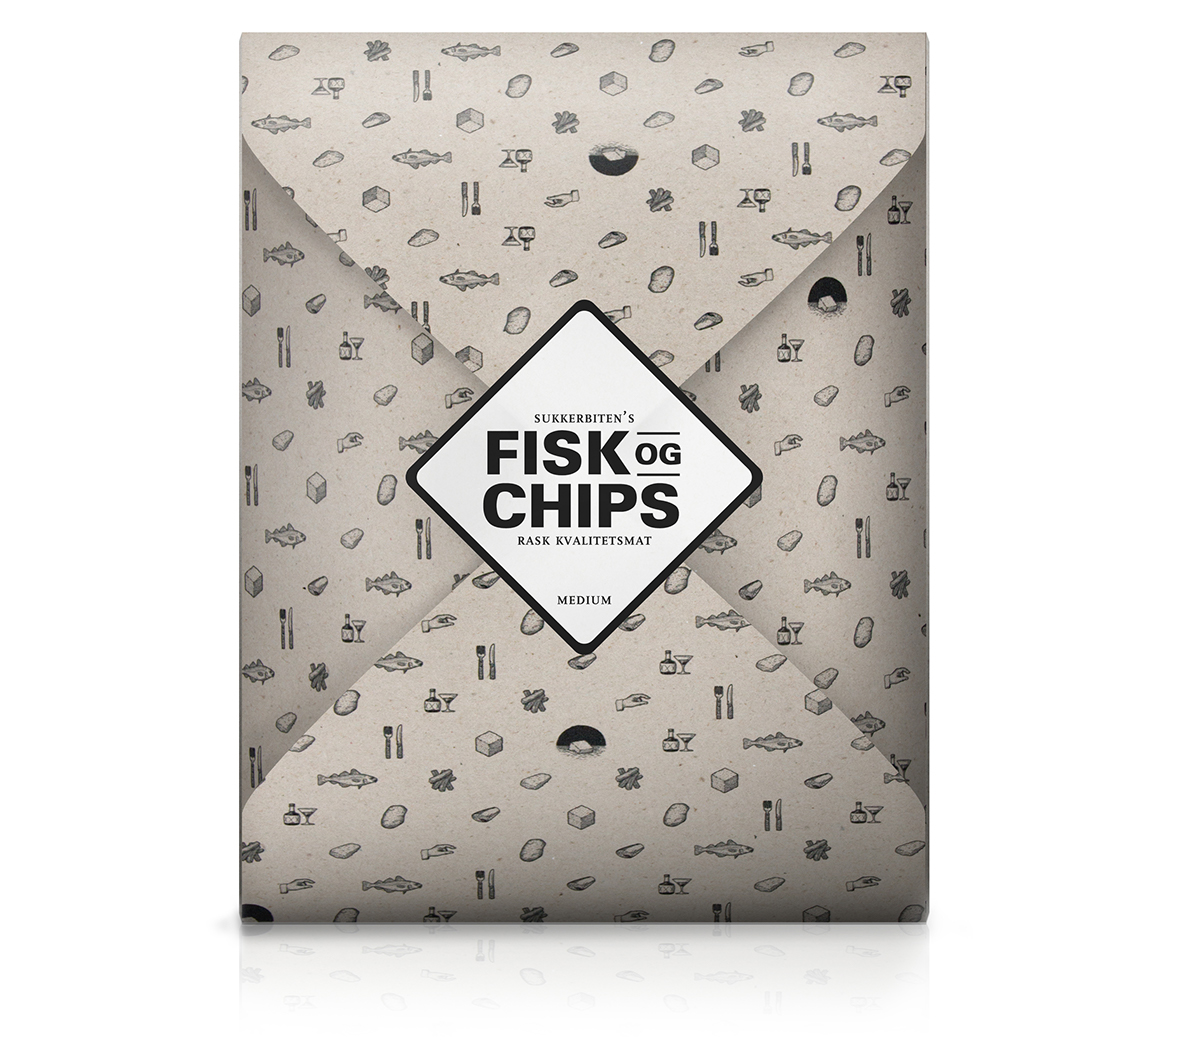 pictogram fish and chips wayfinding brand logo skull arrow teeth identity mockups Mockup free Idenitity inspire